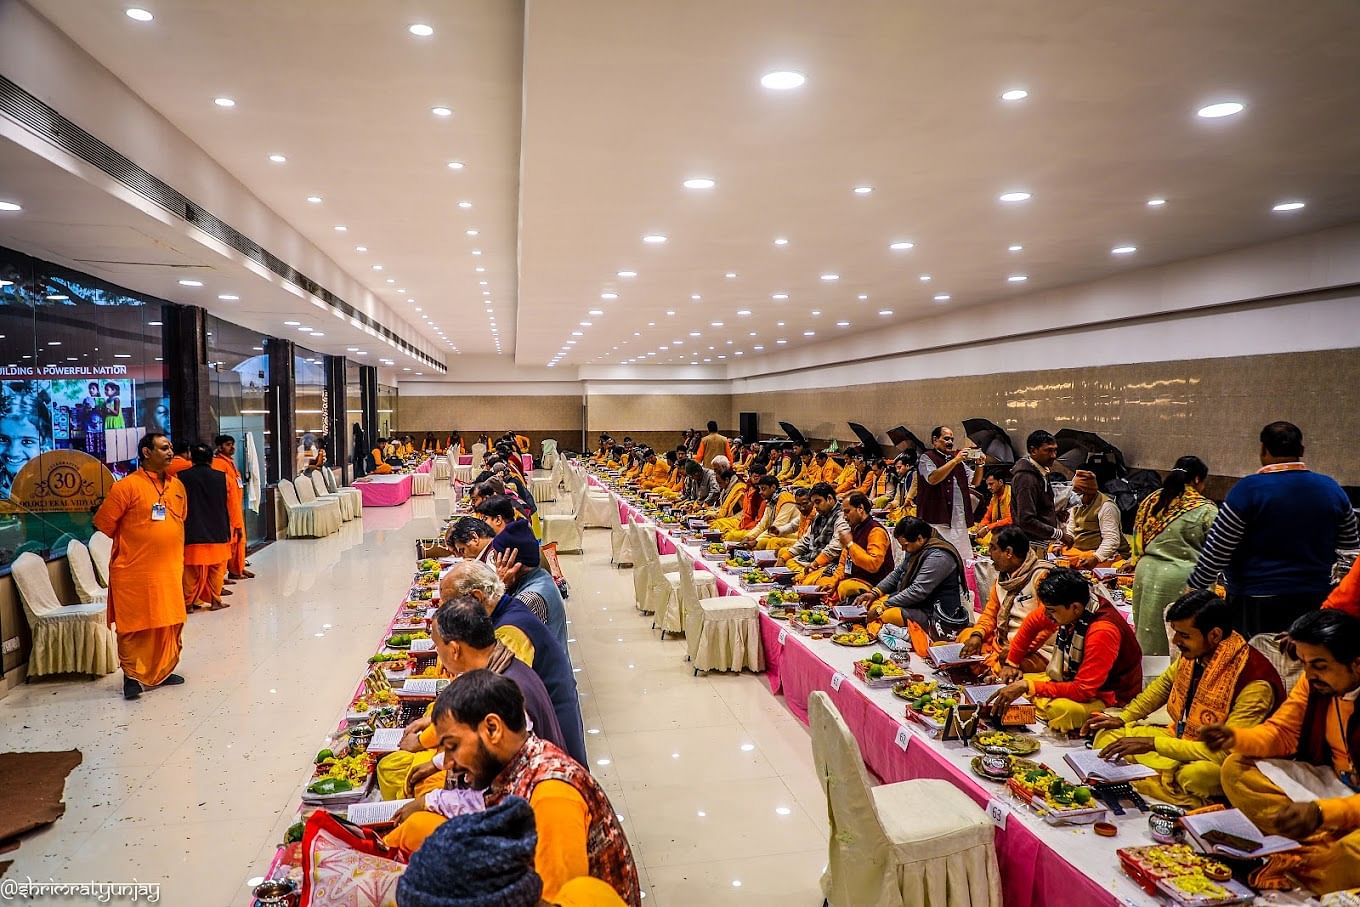 Bidhan Garden Banquet in Ultadanga, Kolkata